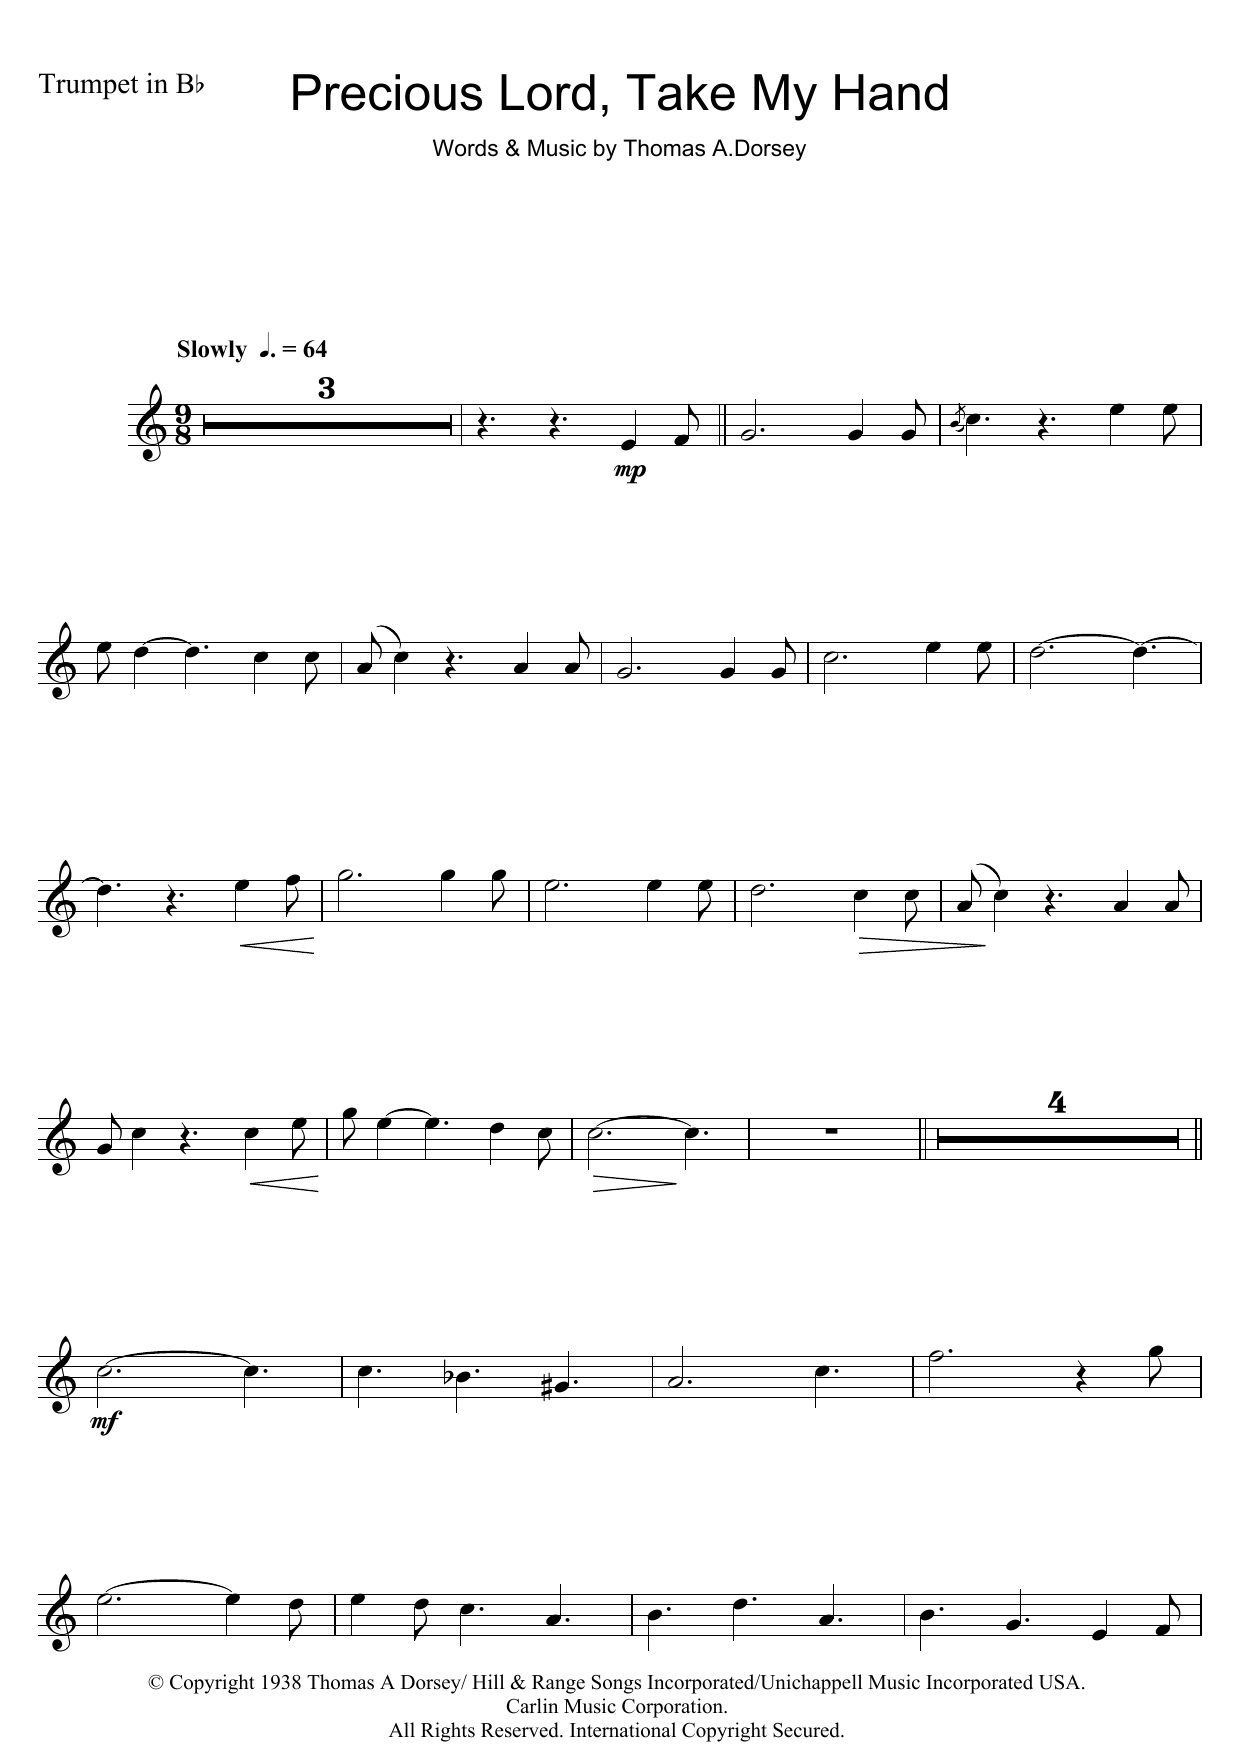 Aretha Franklin Precious Lord, Take My Hand (Take My Hand, Precious Lord) Sheet Music Notes & Chords for Melody Line, Lyrics & Chords - Download or Print PDF